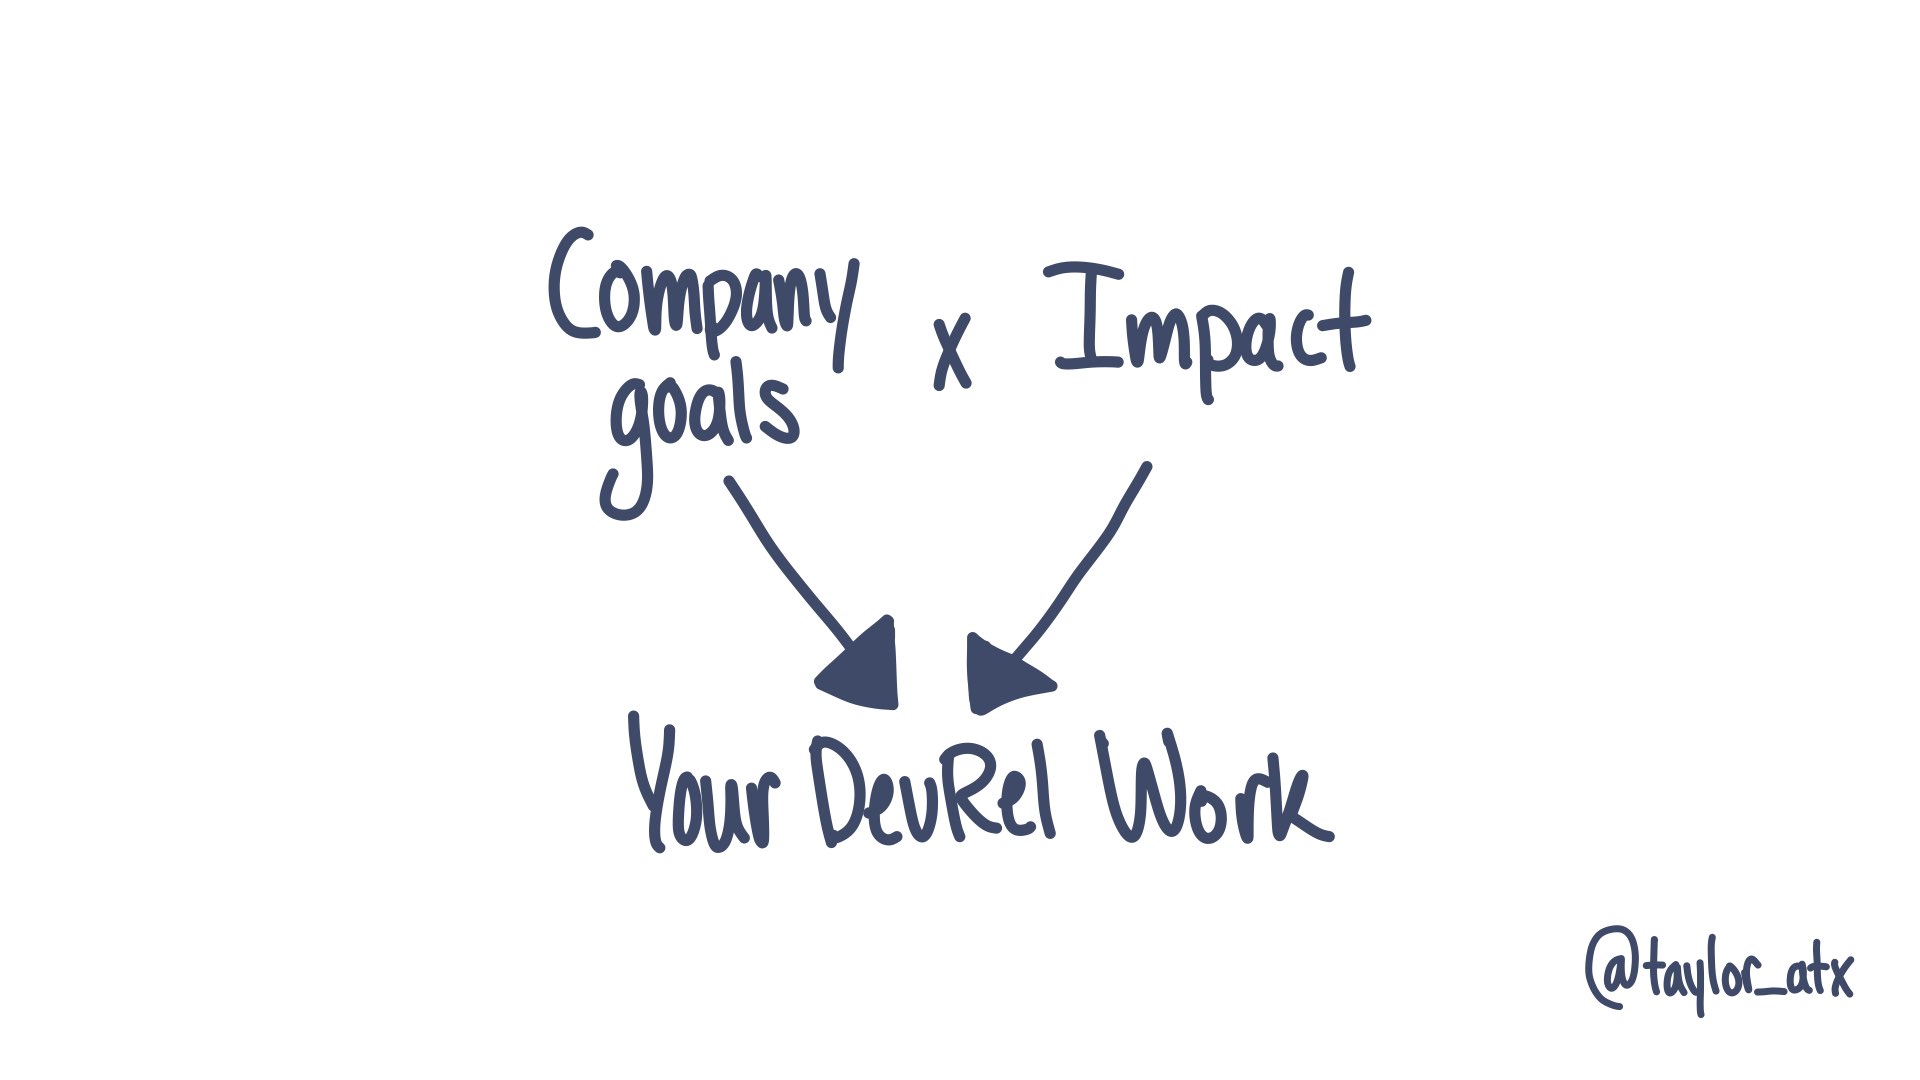 Company goals x potential impact = Your DevRel work